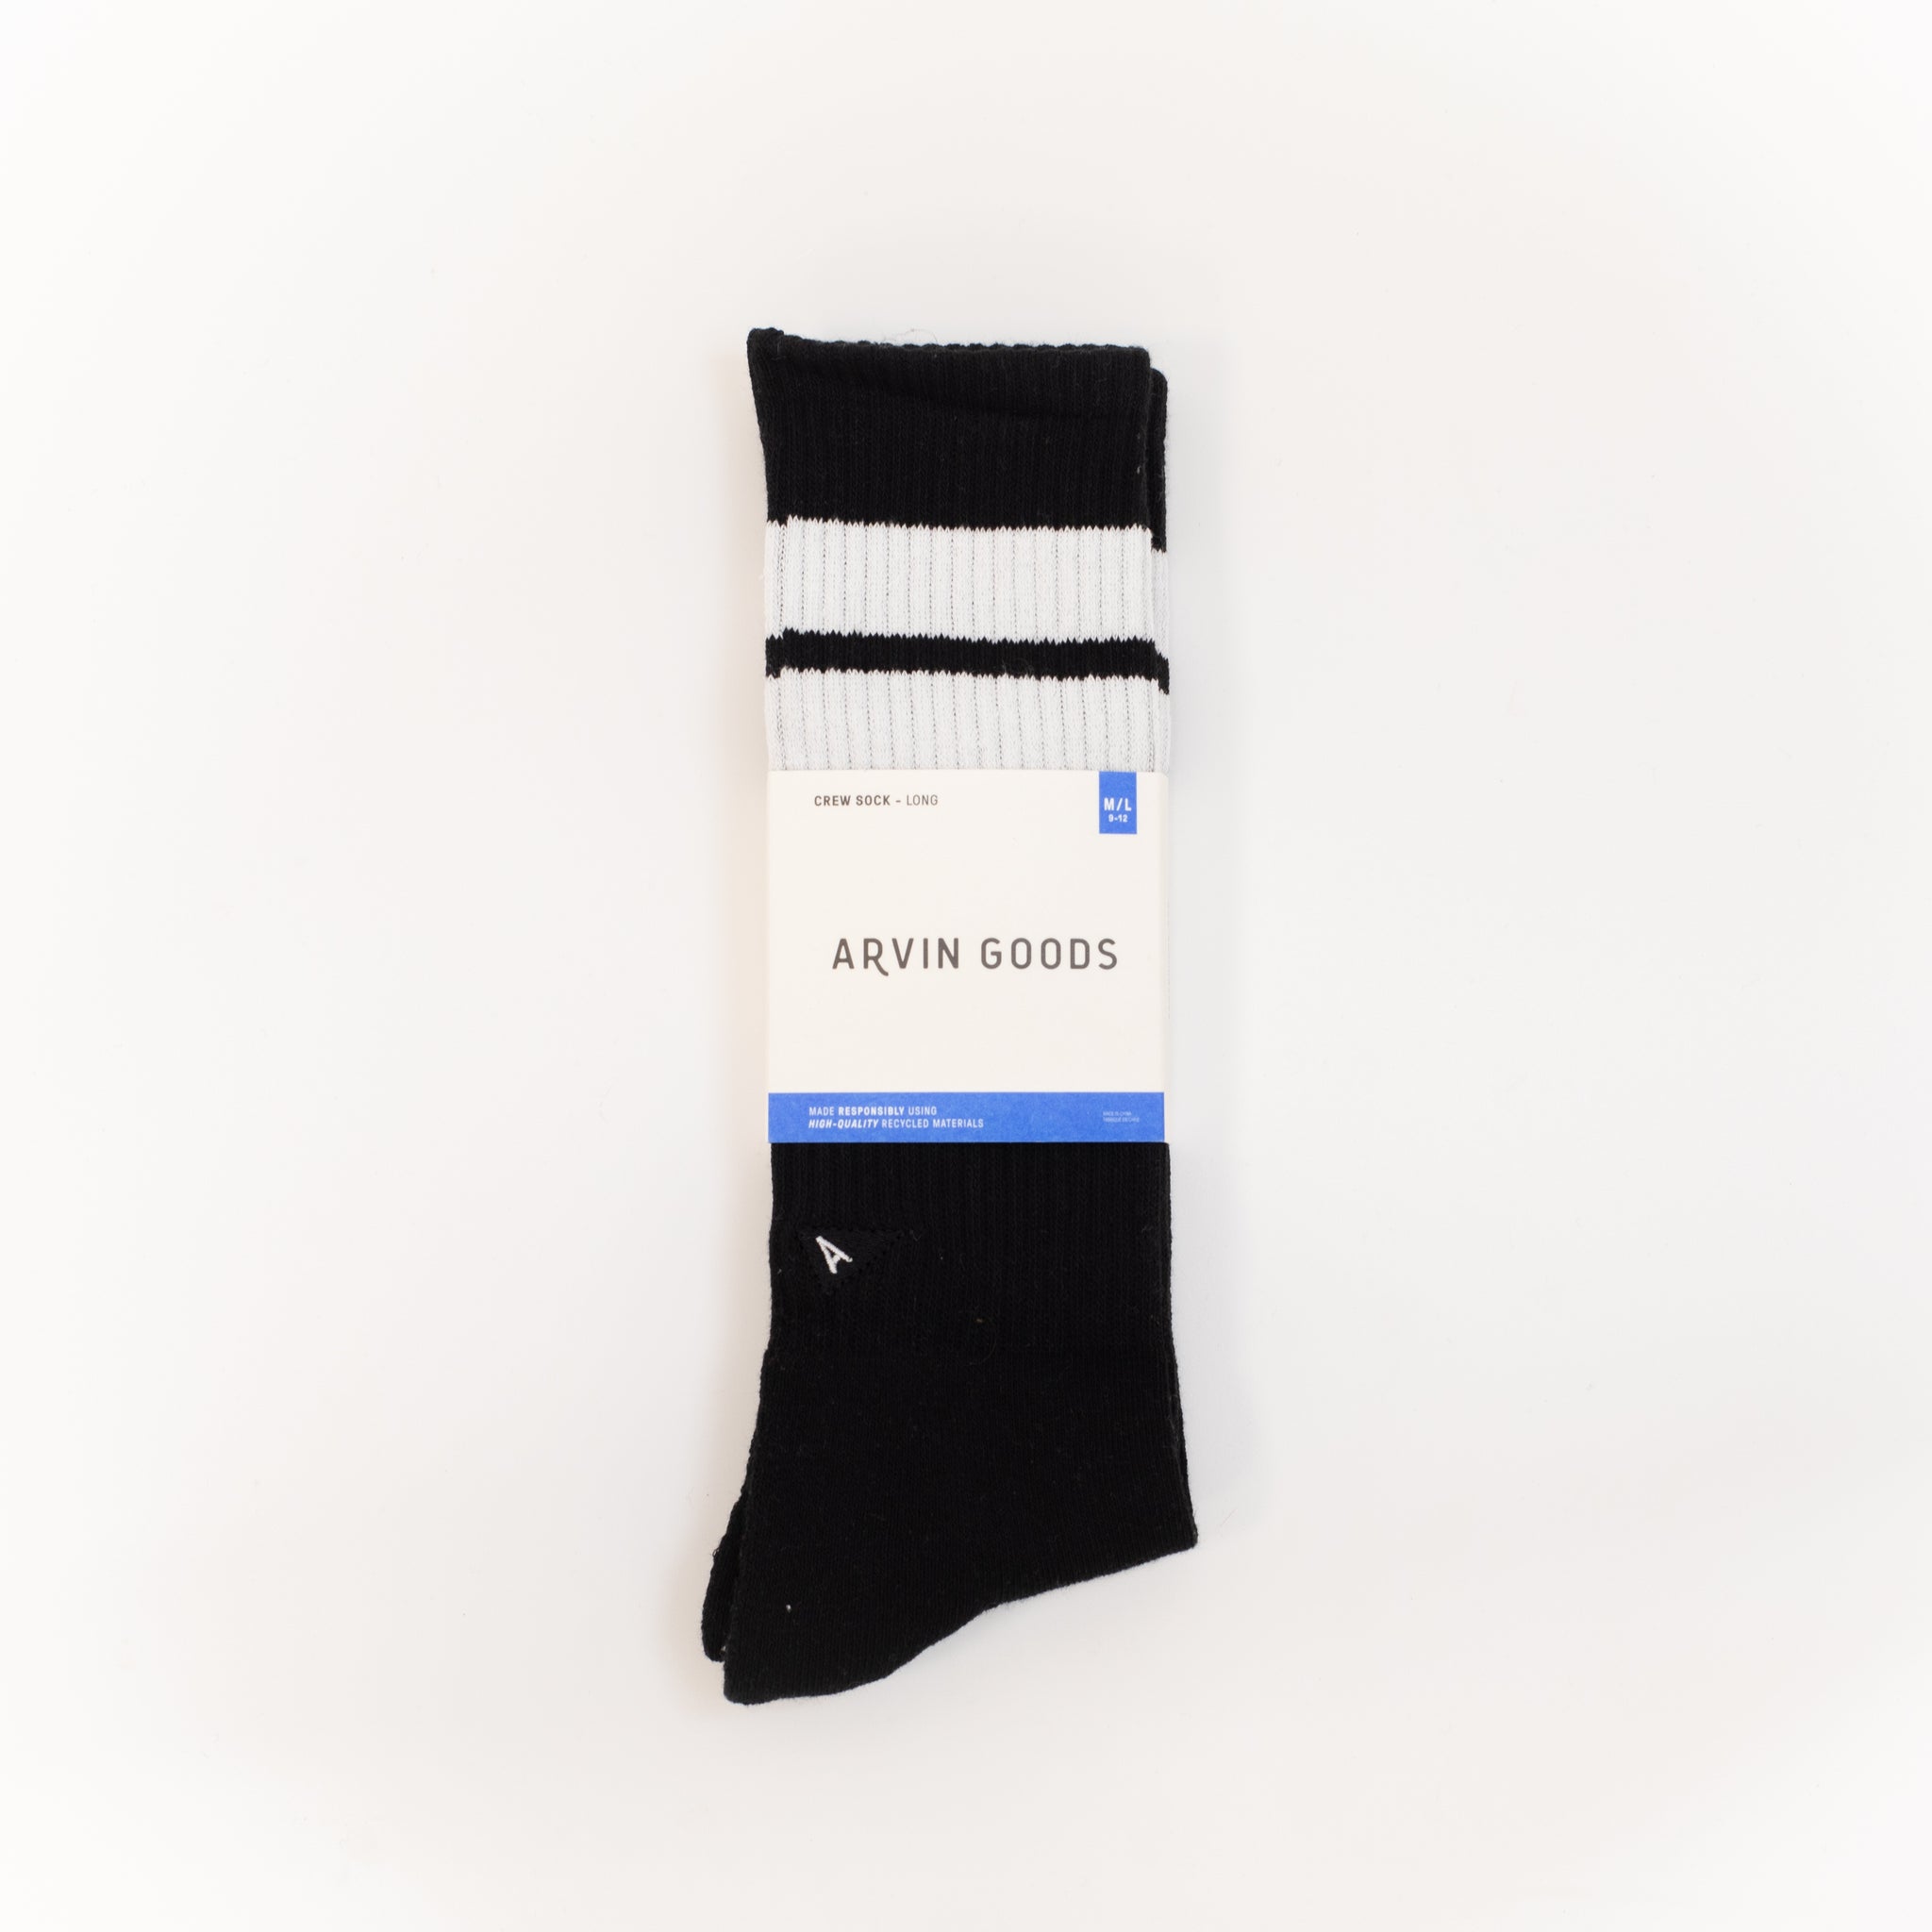 Arvin Goods Crew Sock Long - Black Noir - Last Pair